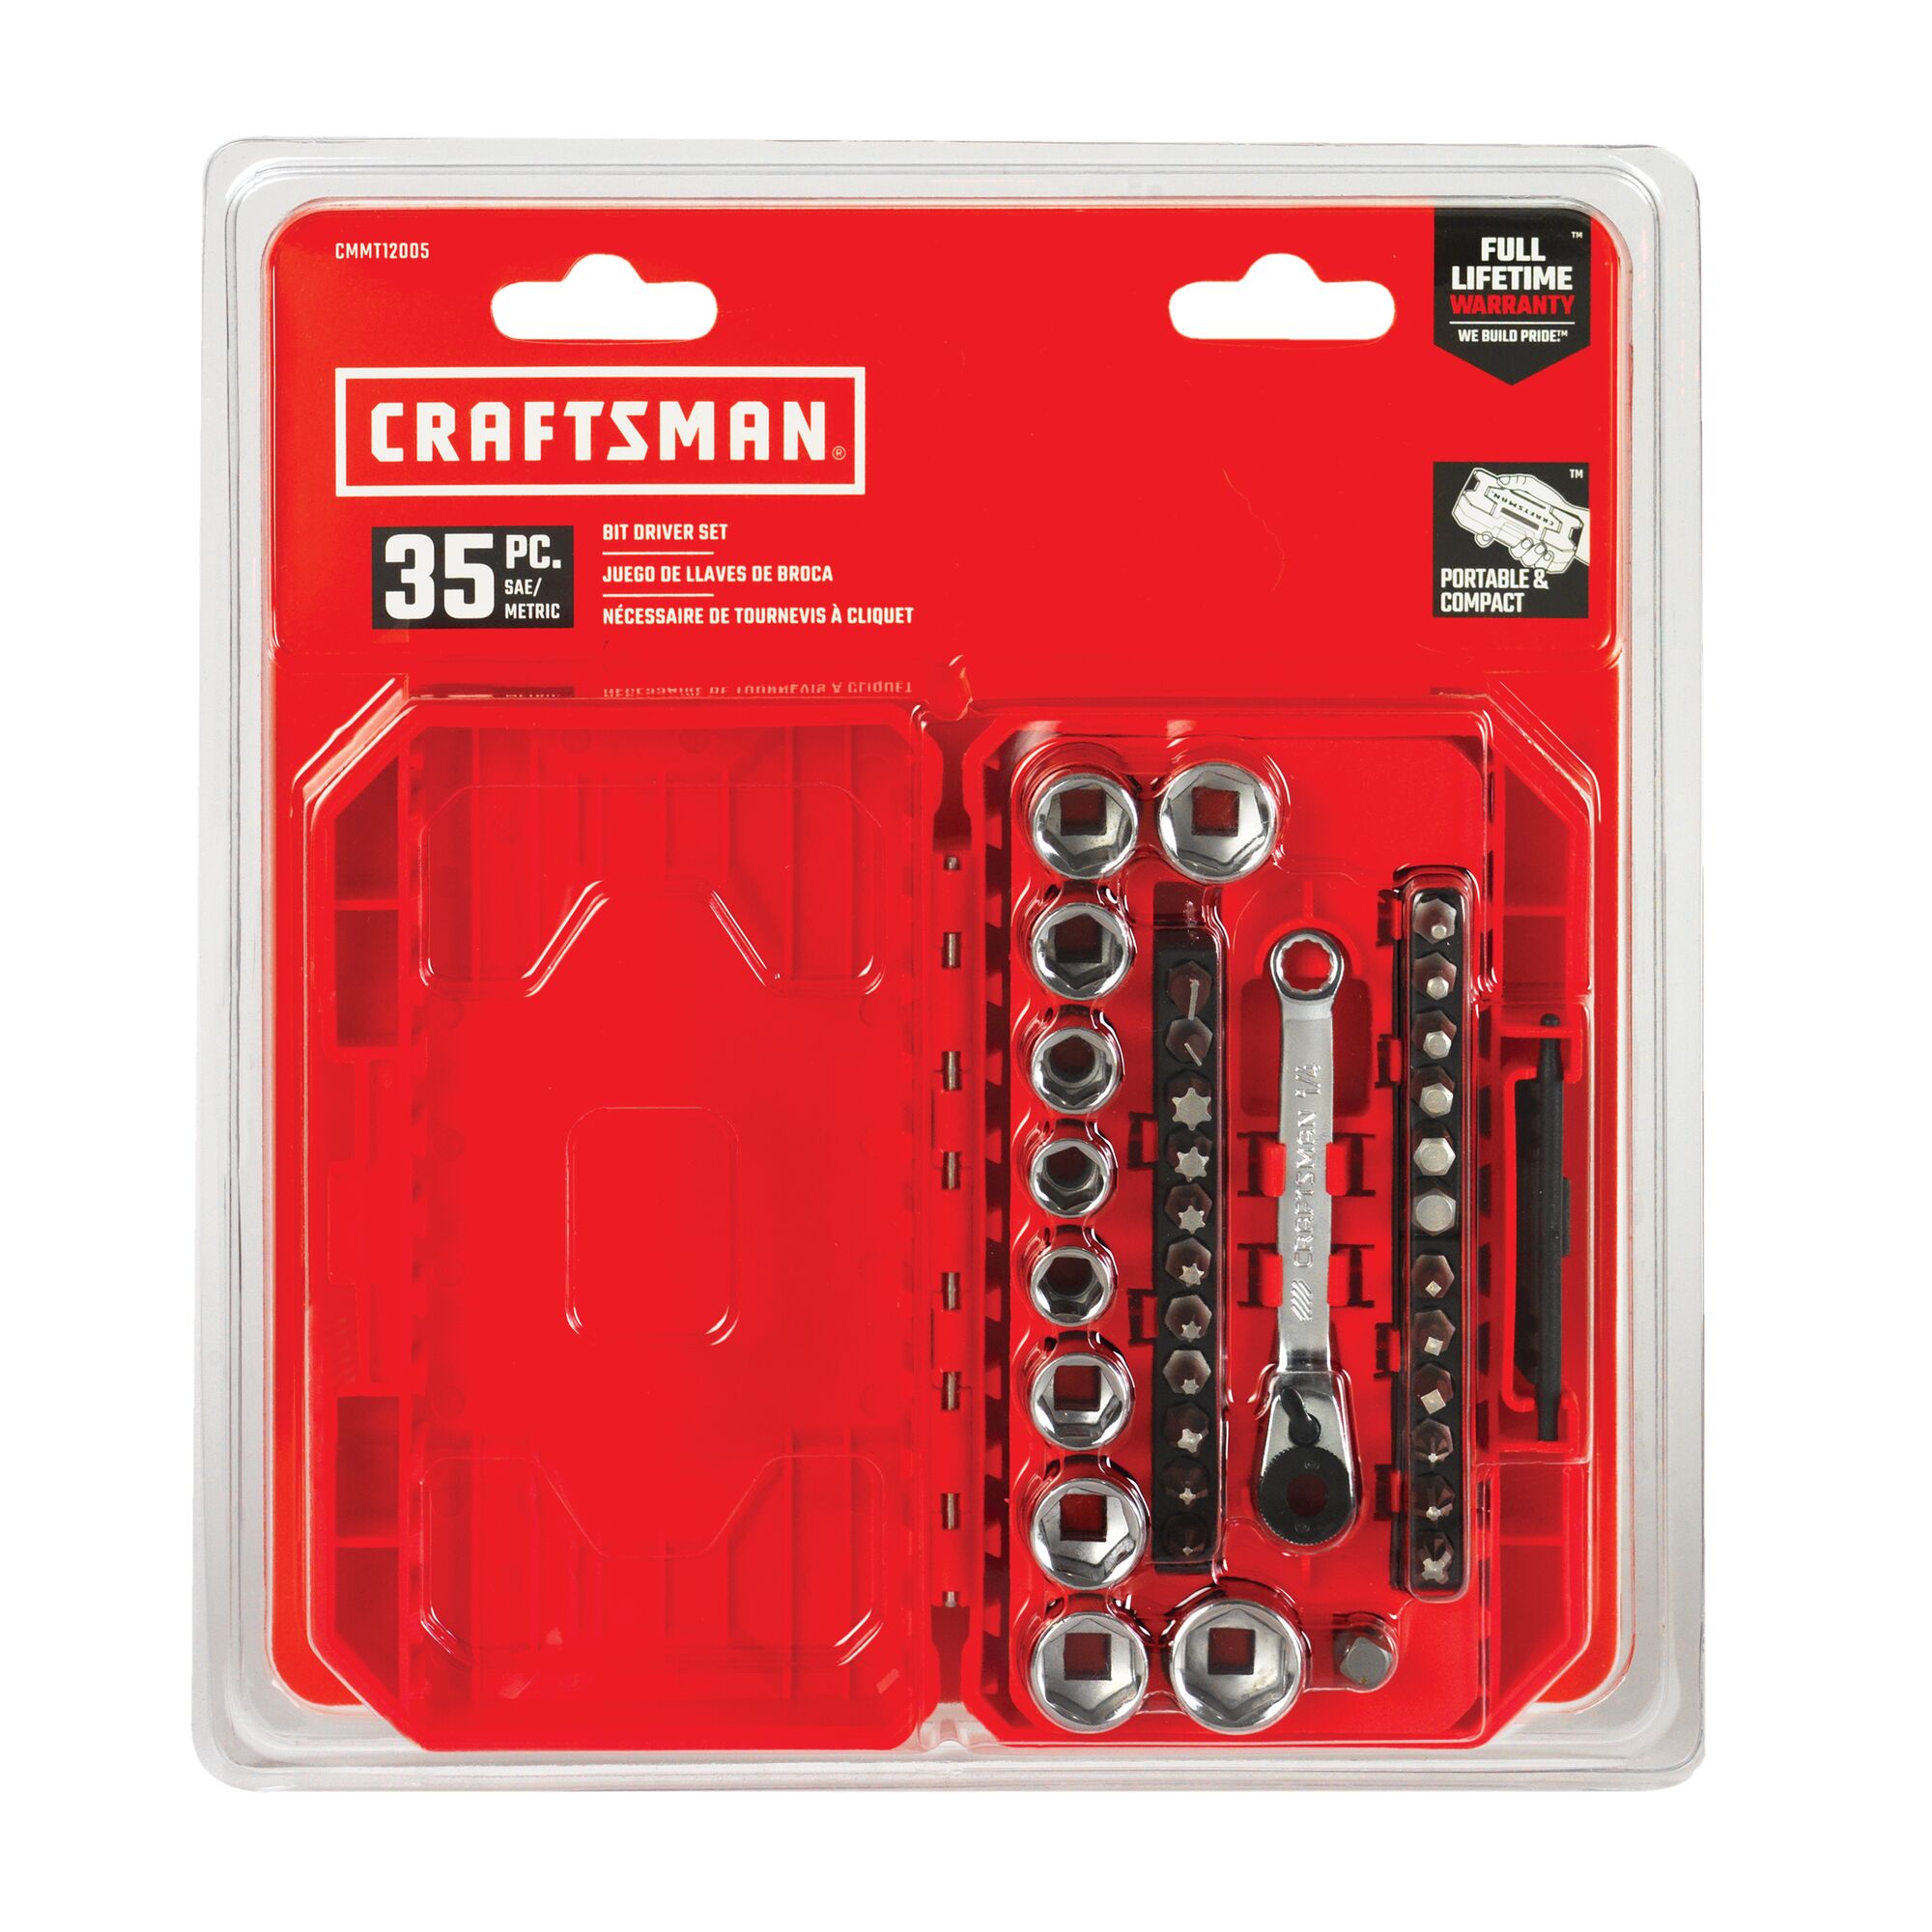 View of CRAFTSMAN Sockets: Set packaging